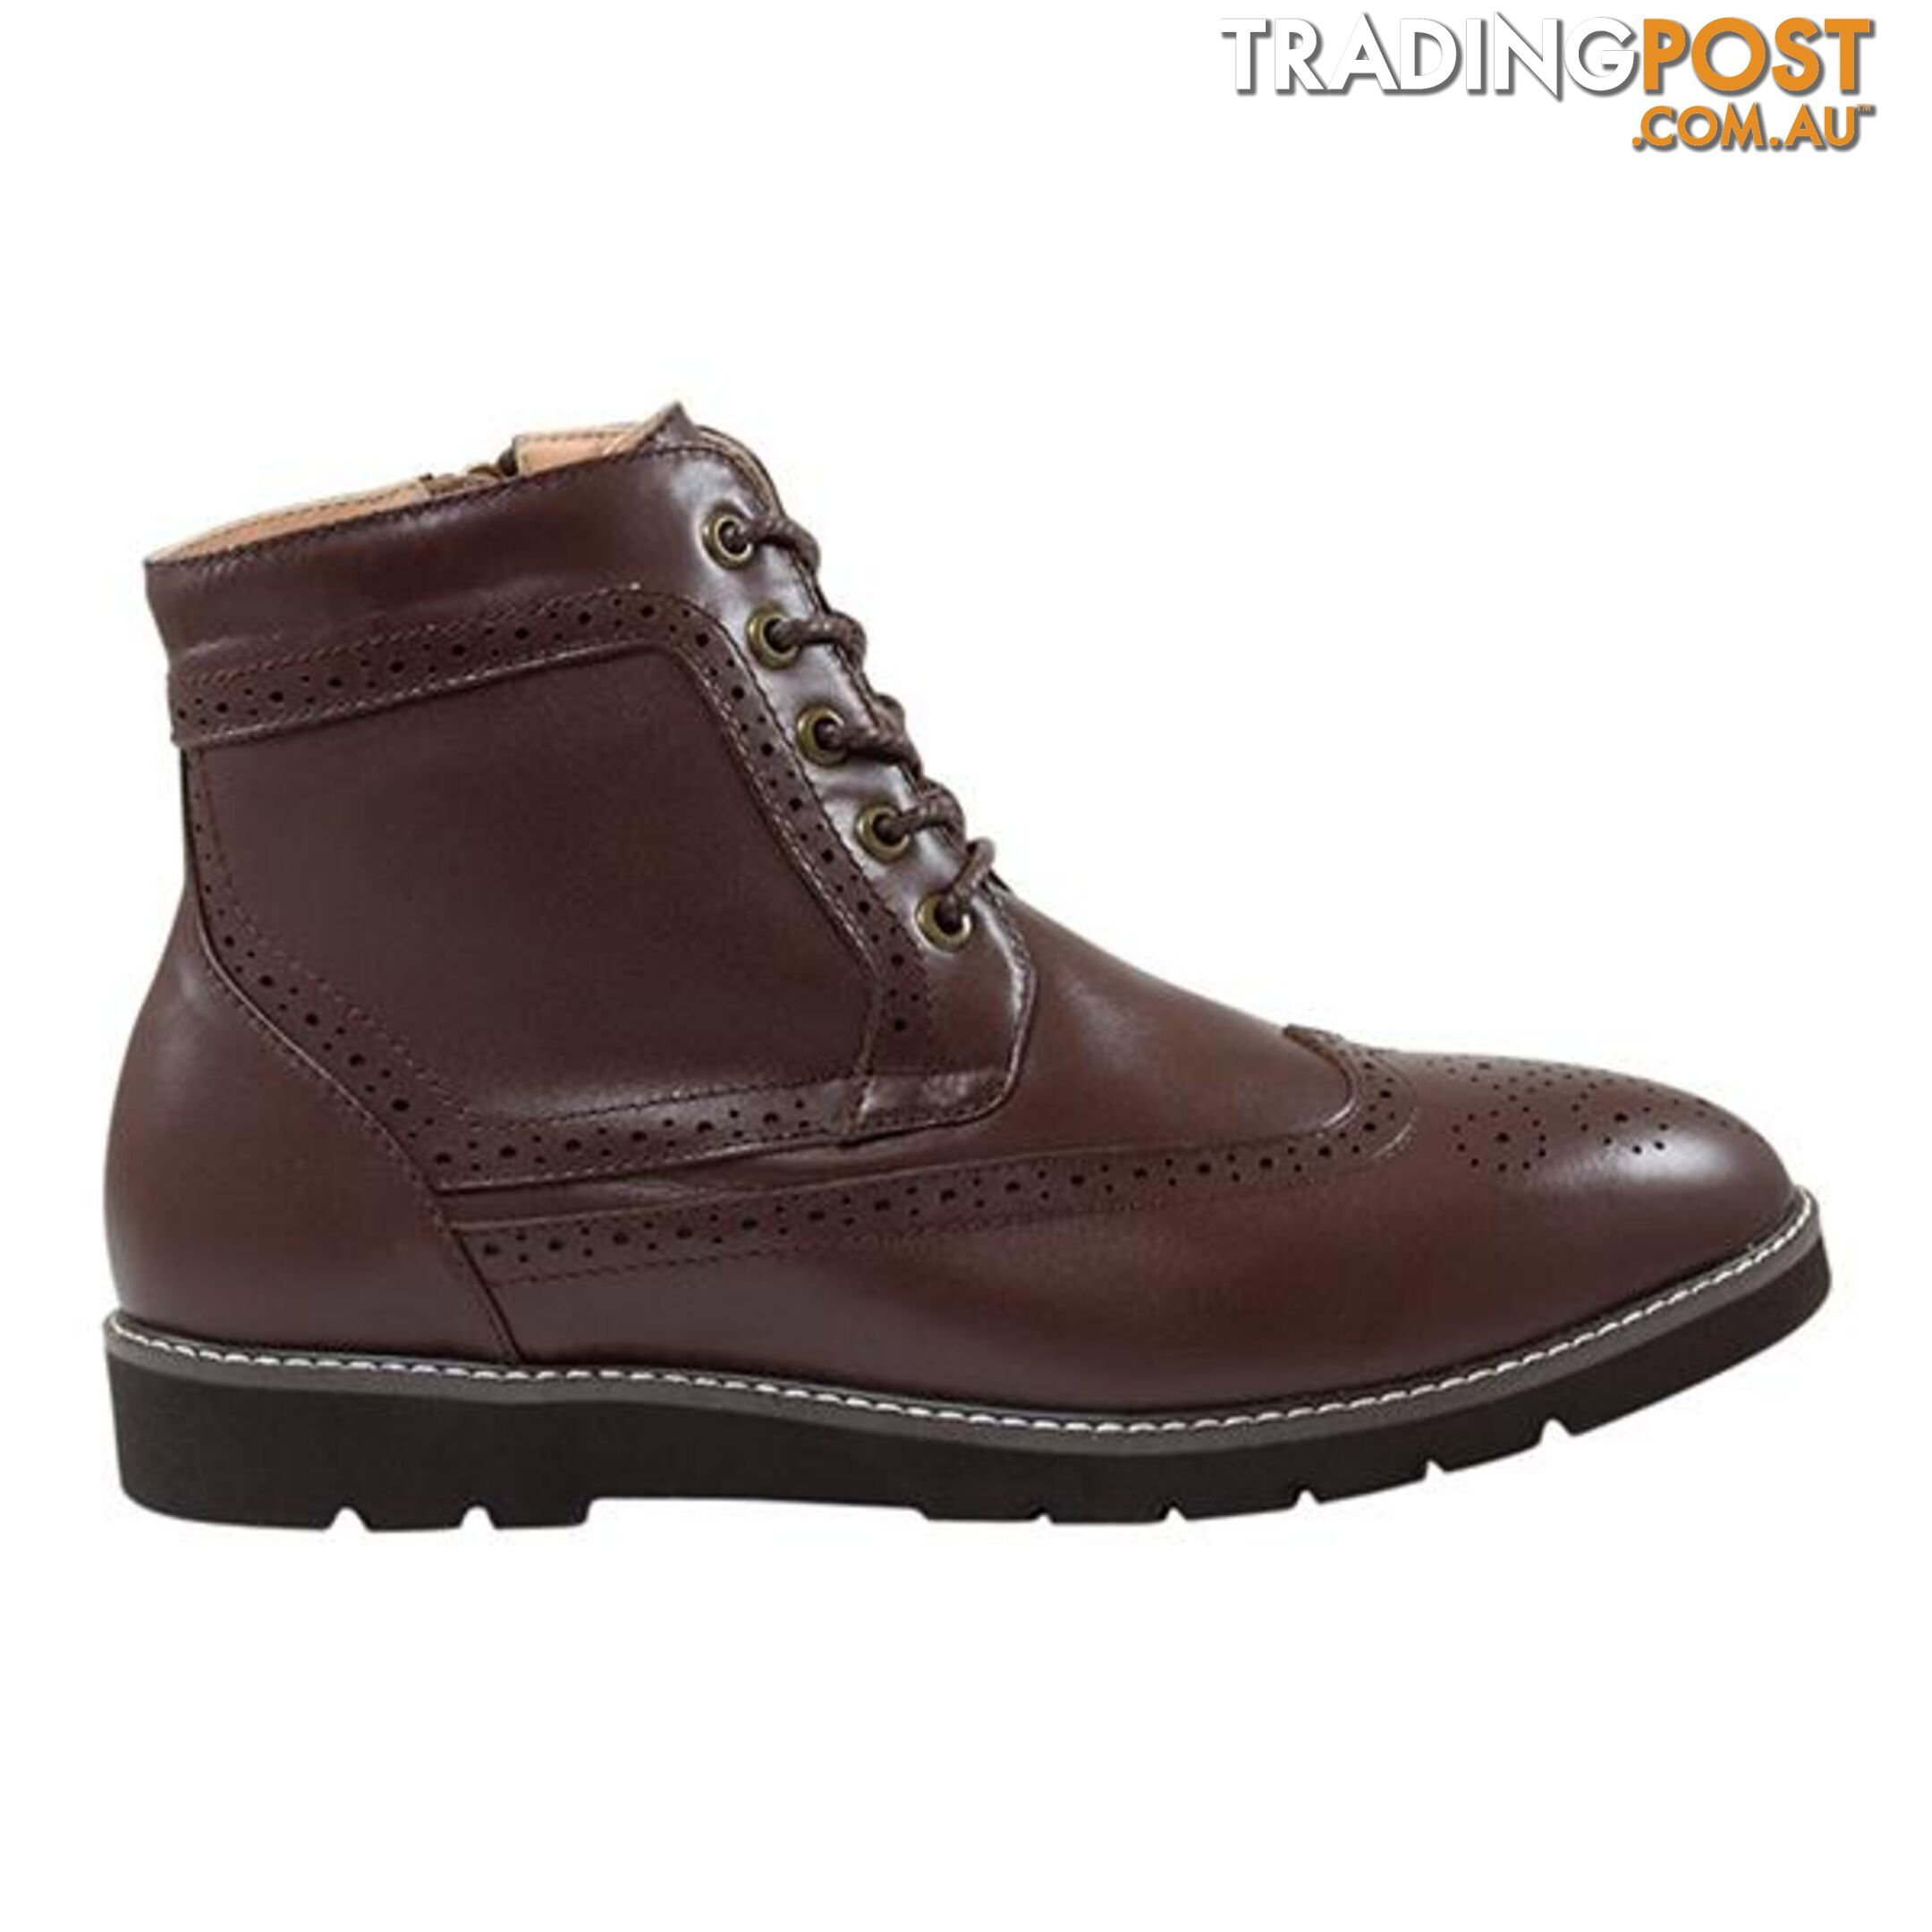 Auzland Mens Leather Wool Lined Brogue Boot Coffee - AUZLAND - 822427539655